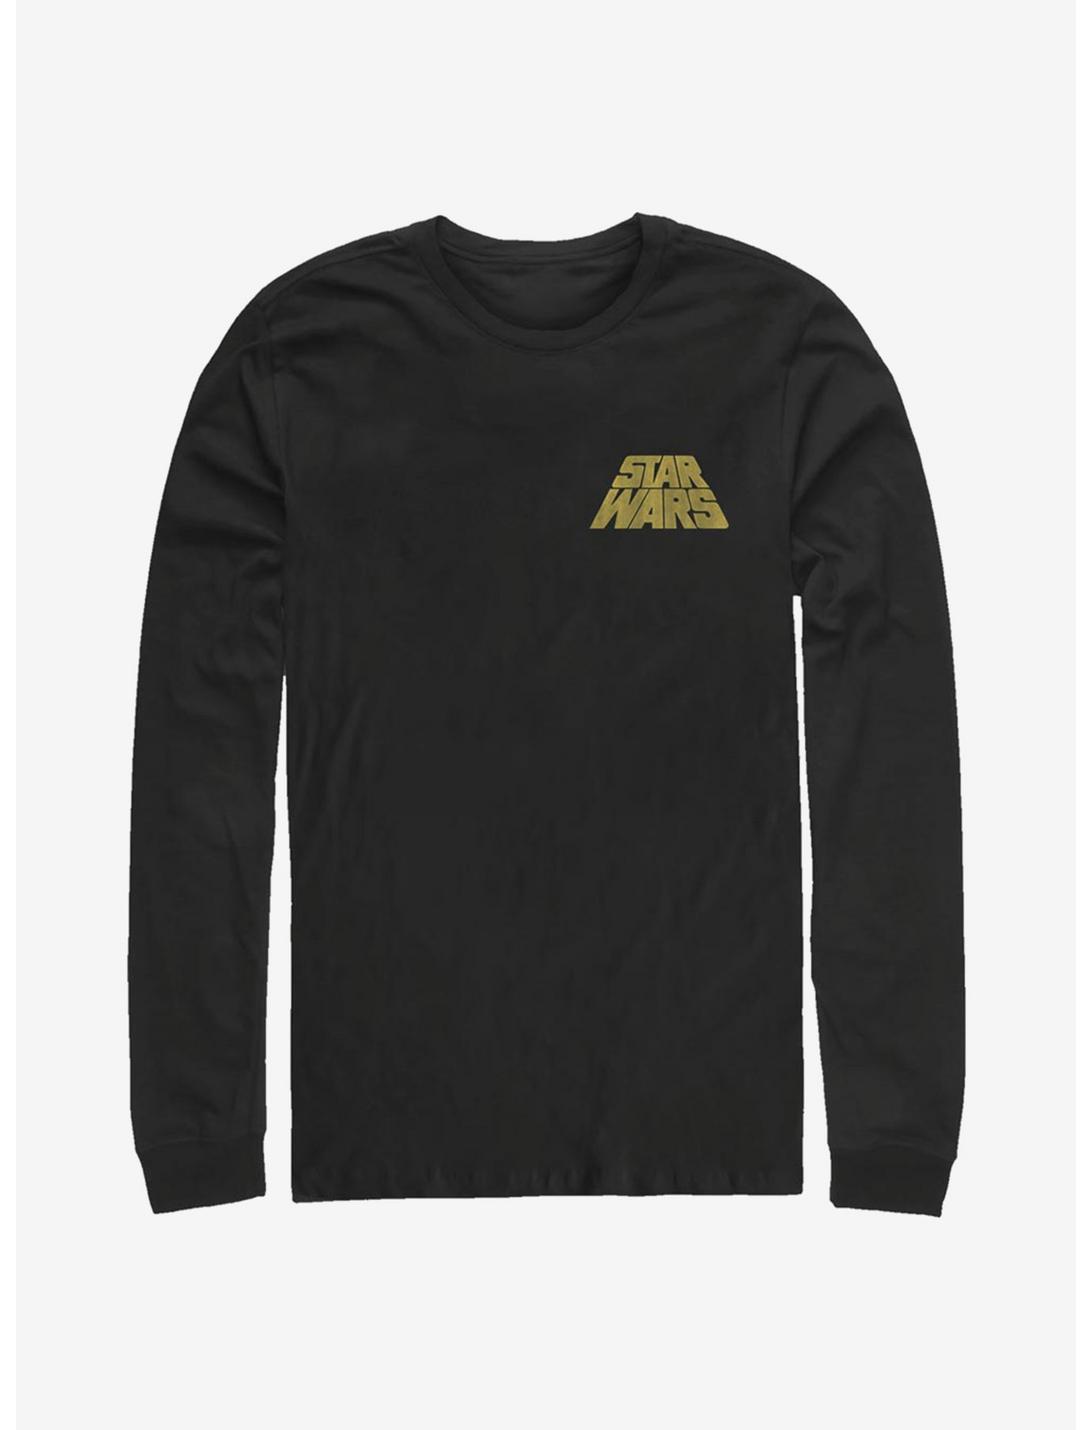 Star Wars Distressed Slant Logo Long-Sleeve T-Shirt, BLACK, hi-res